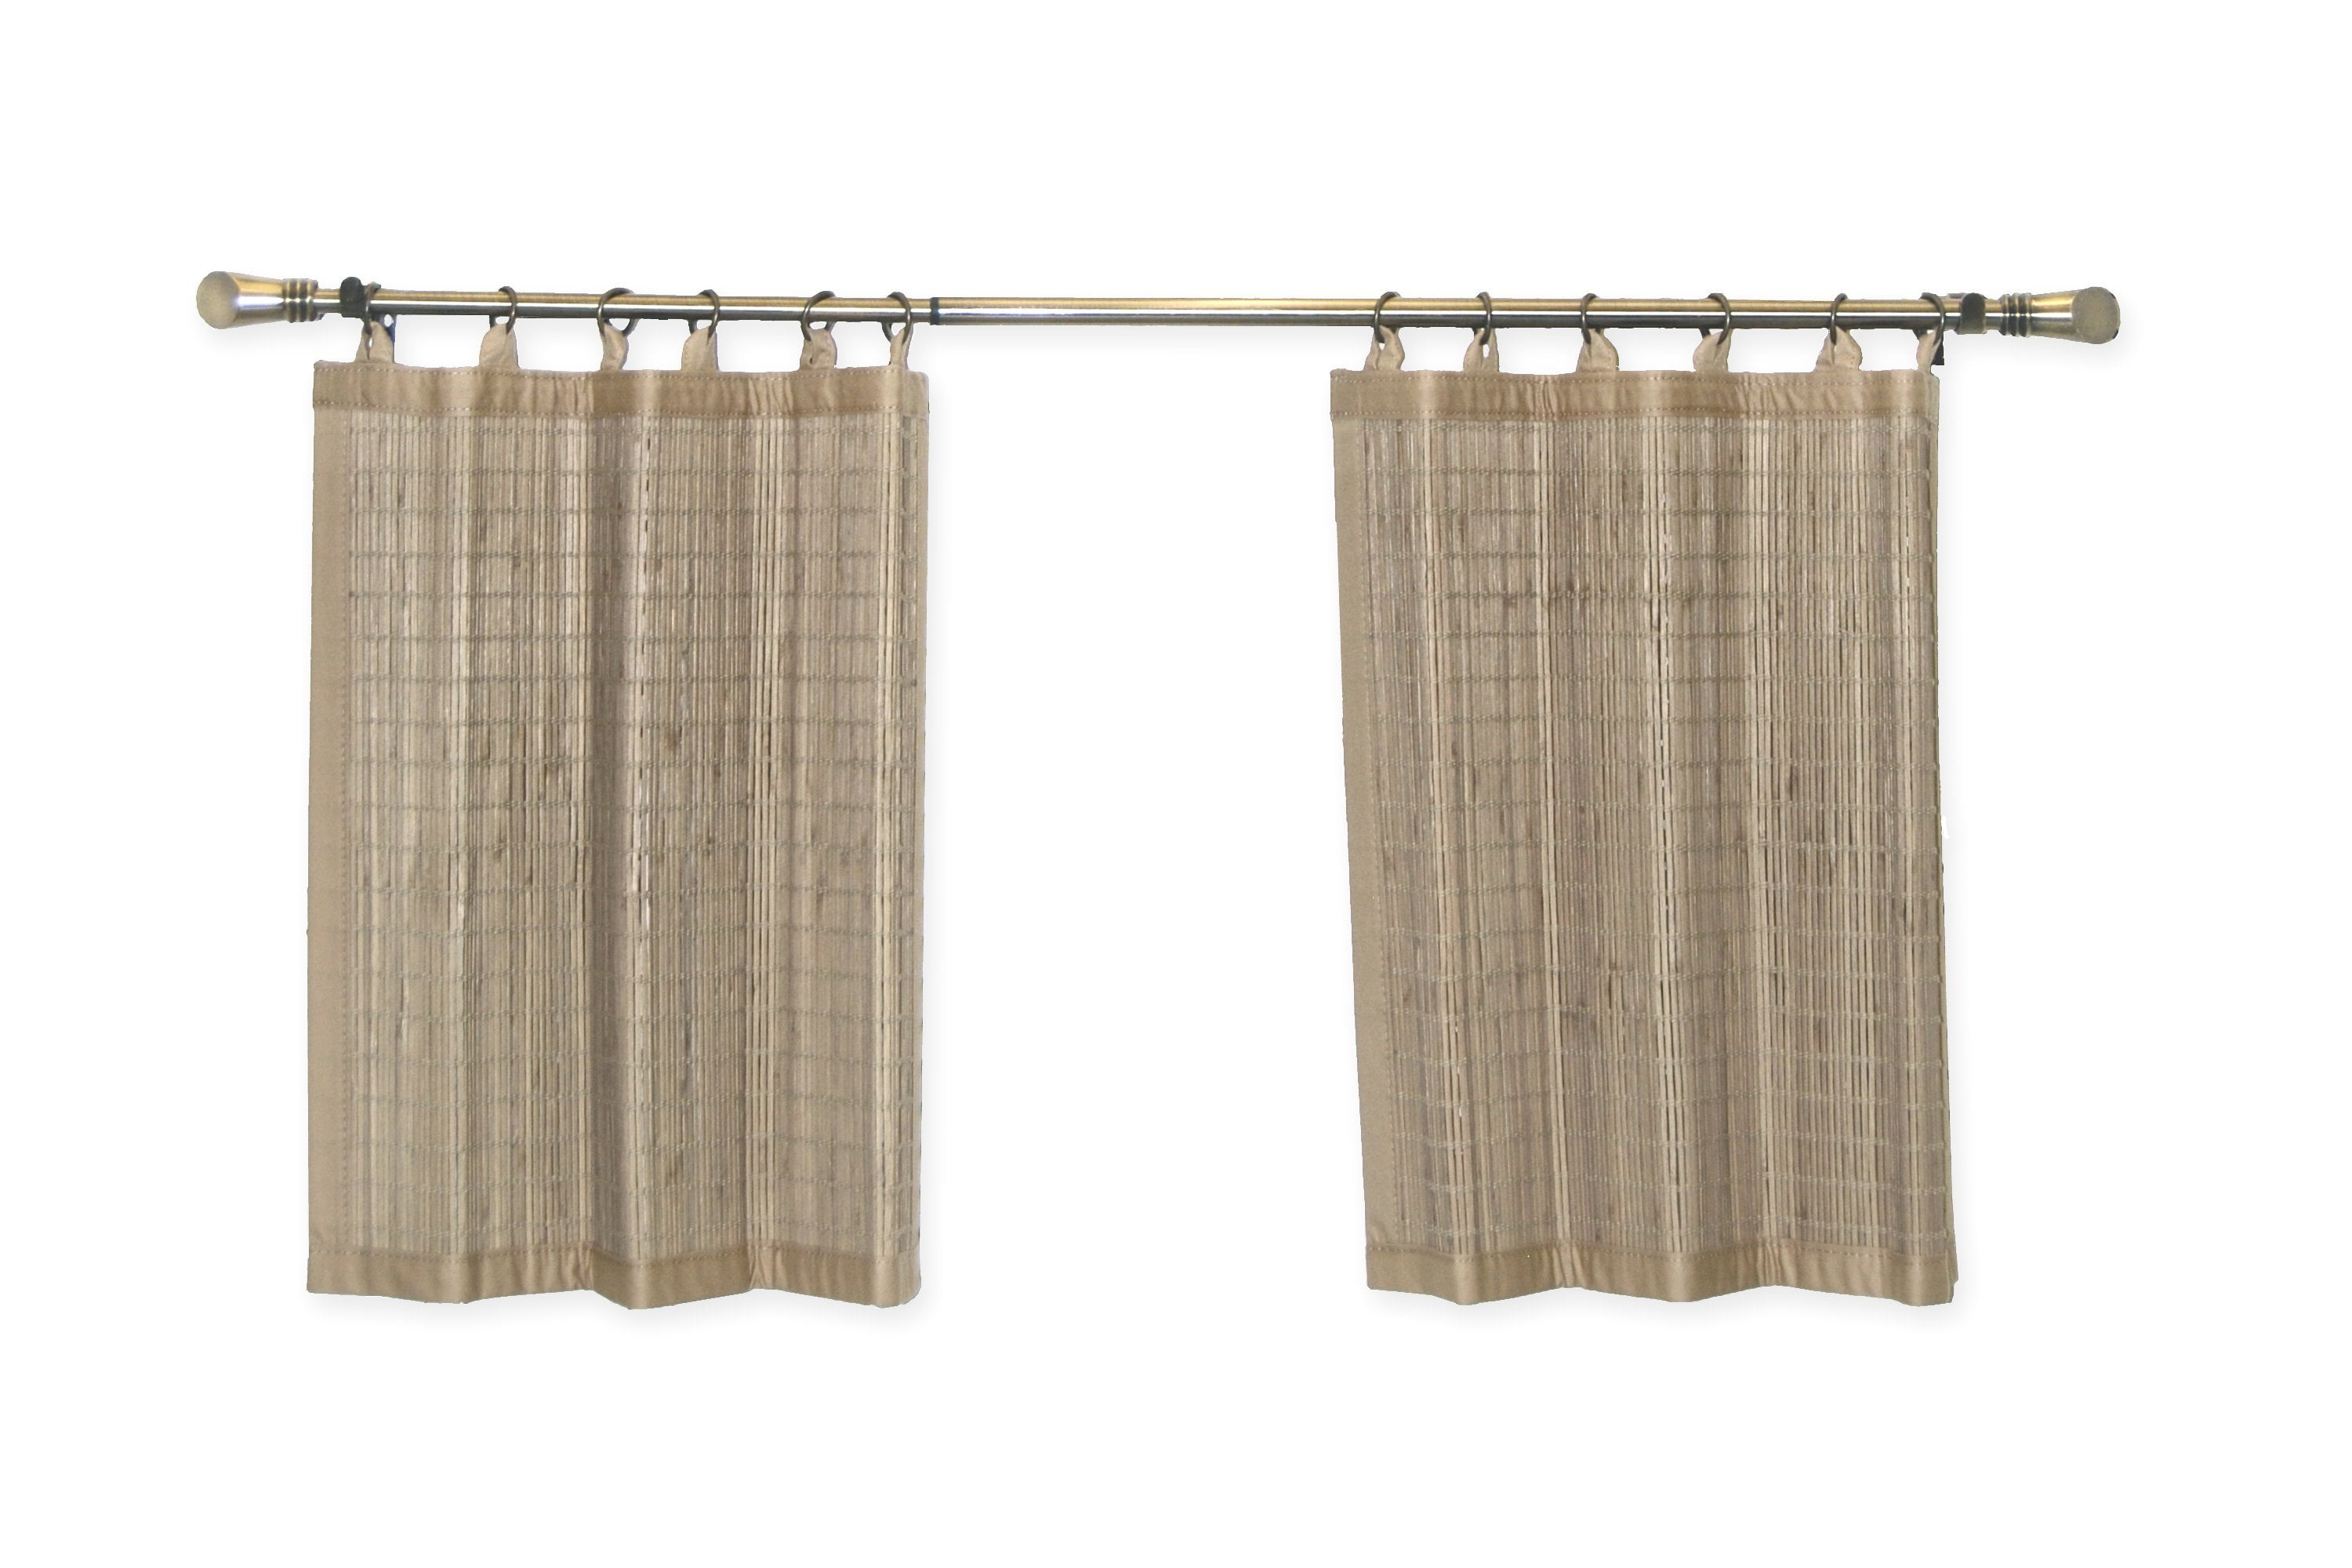 Versailles Designer Series Leaf curtain swag Rings Brass NEW $24.95 value